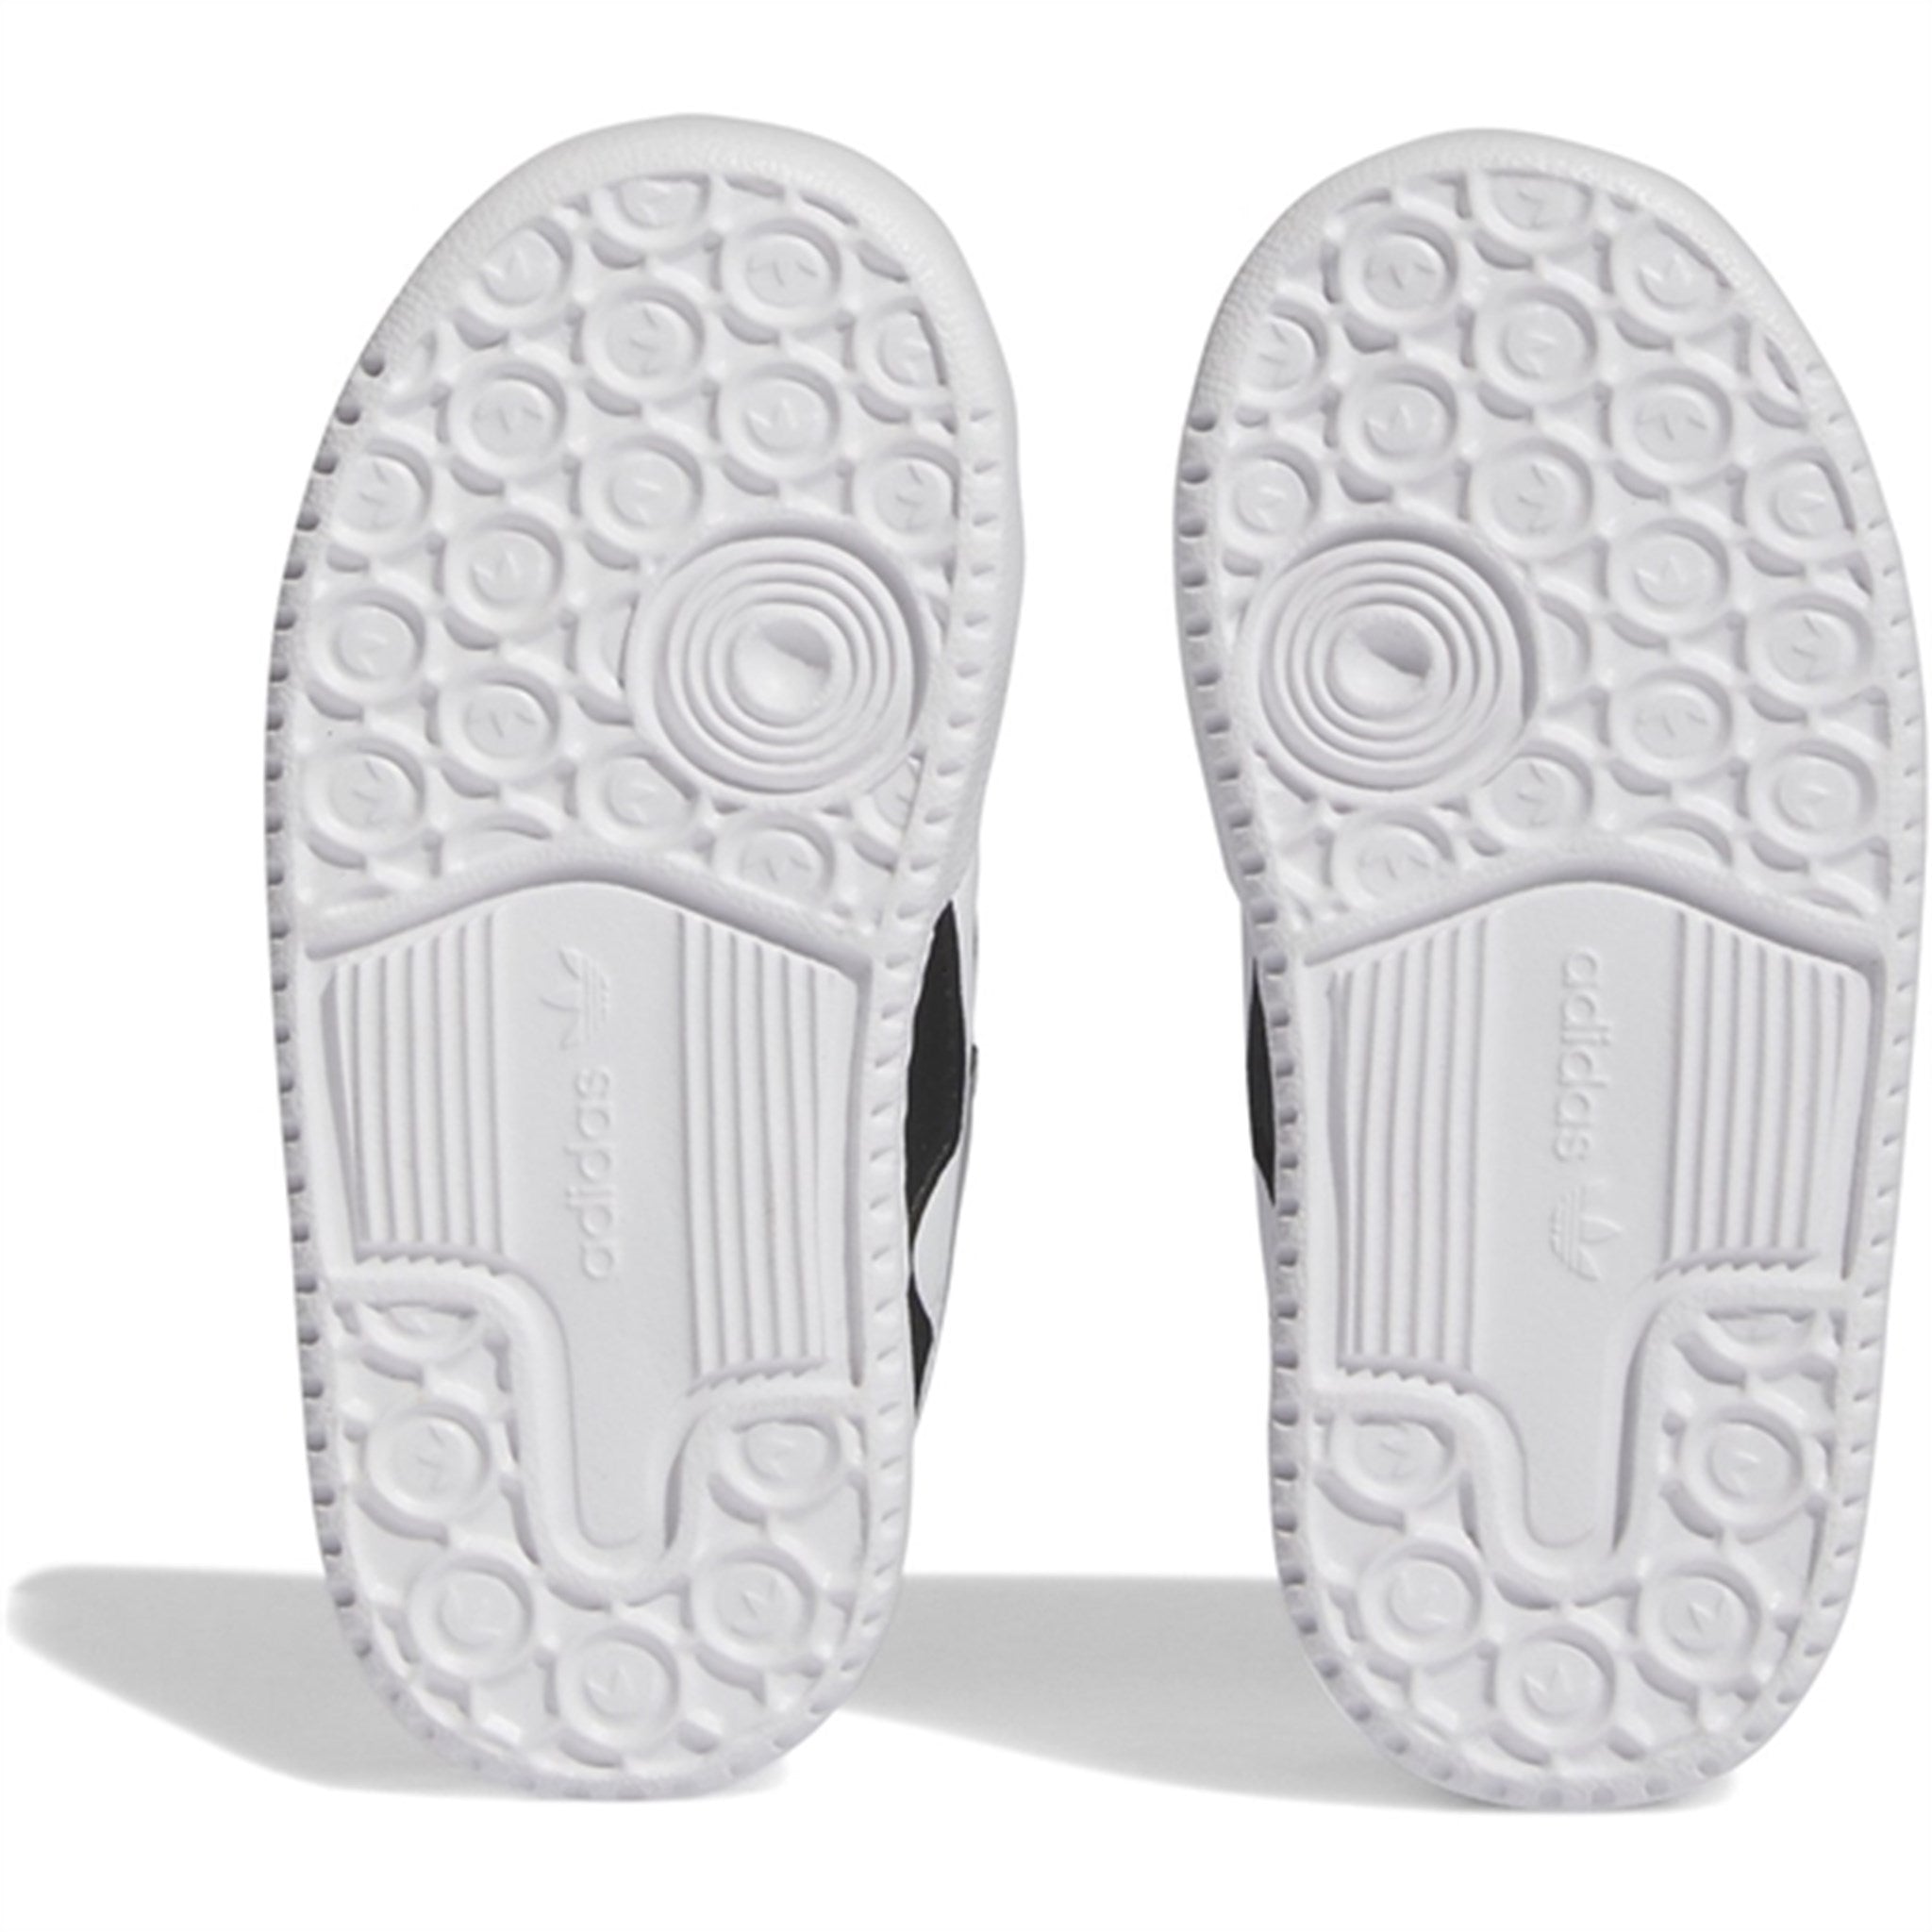 adidas Originals Forum Low Infant Sneakers Black/White 3